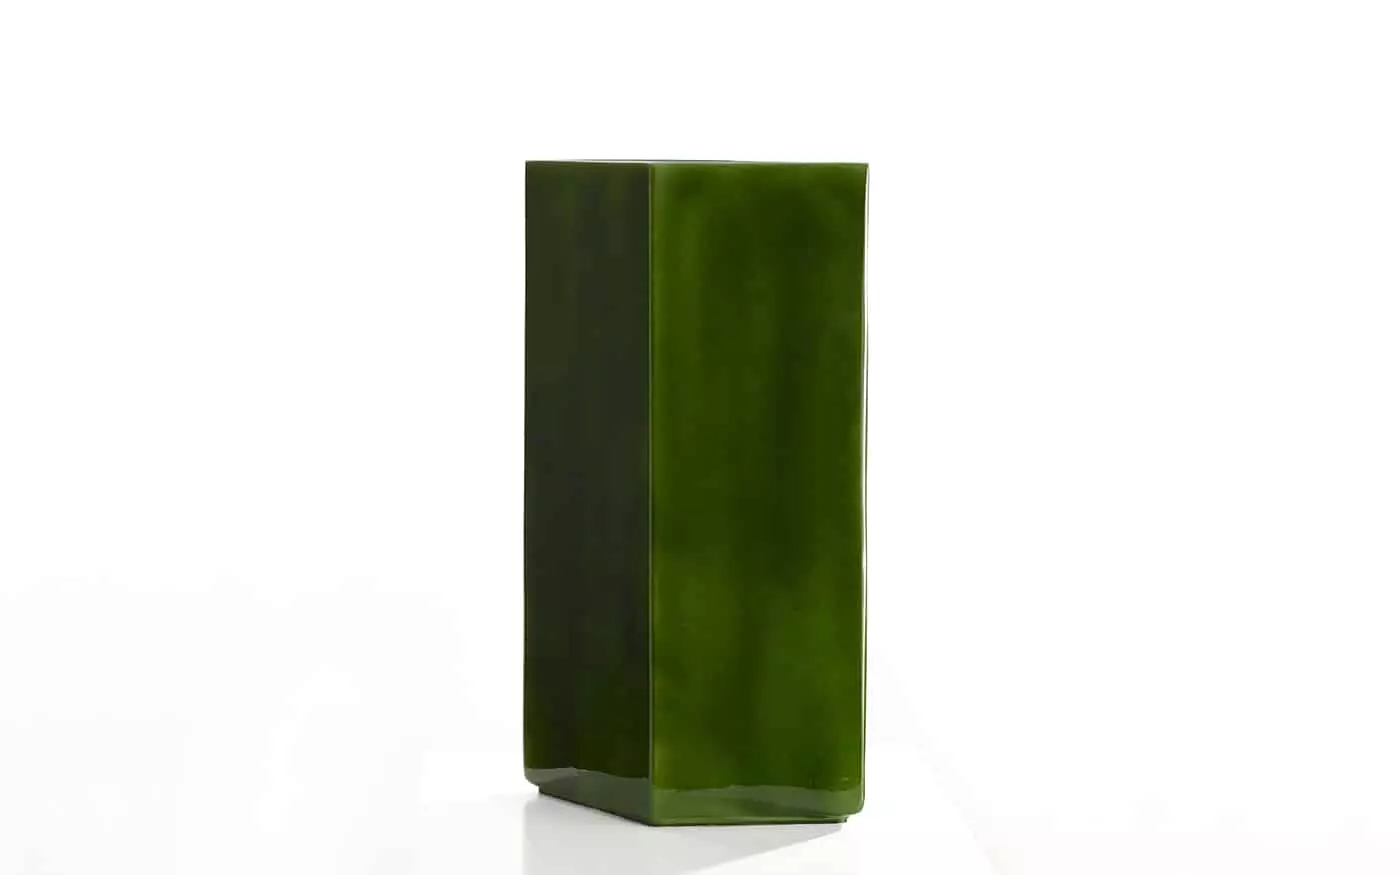 Vase Losange 84 green - Ronan and Erwan Bouroullec - Lucas Ratton x kamel mennour x Galerie kreo x Jacques Lacoste in Saint-Tropez.